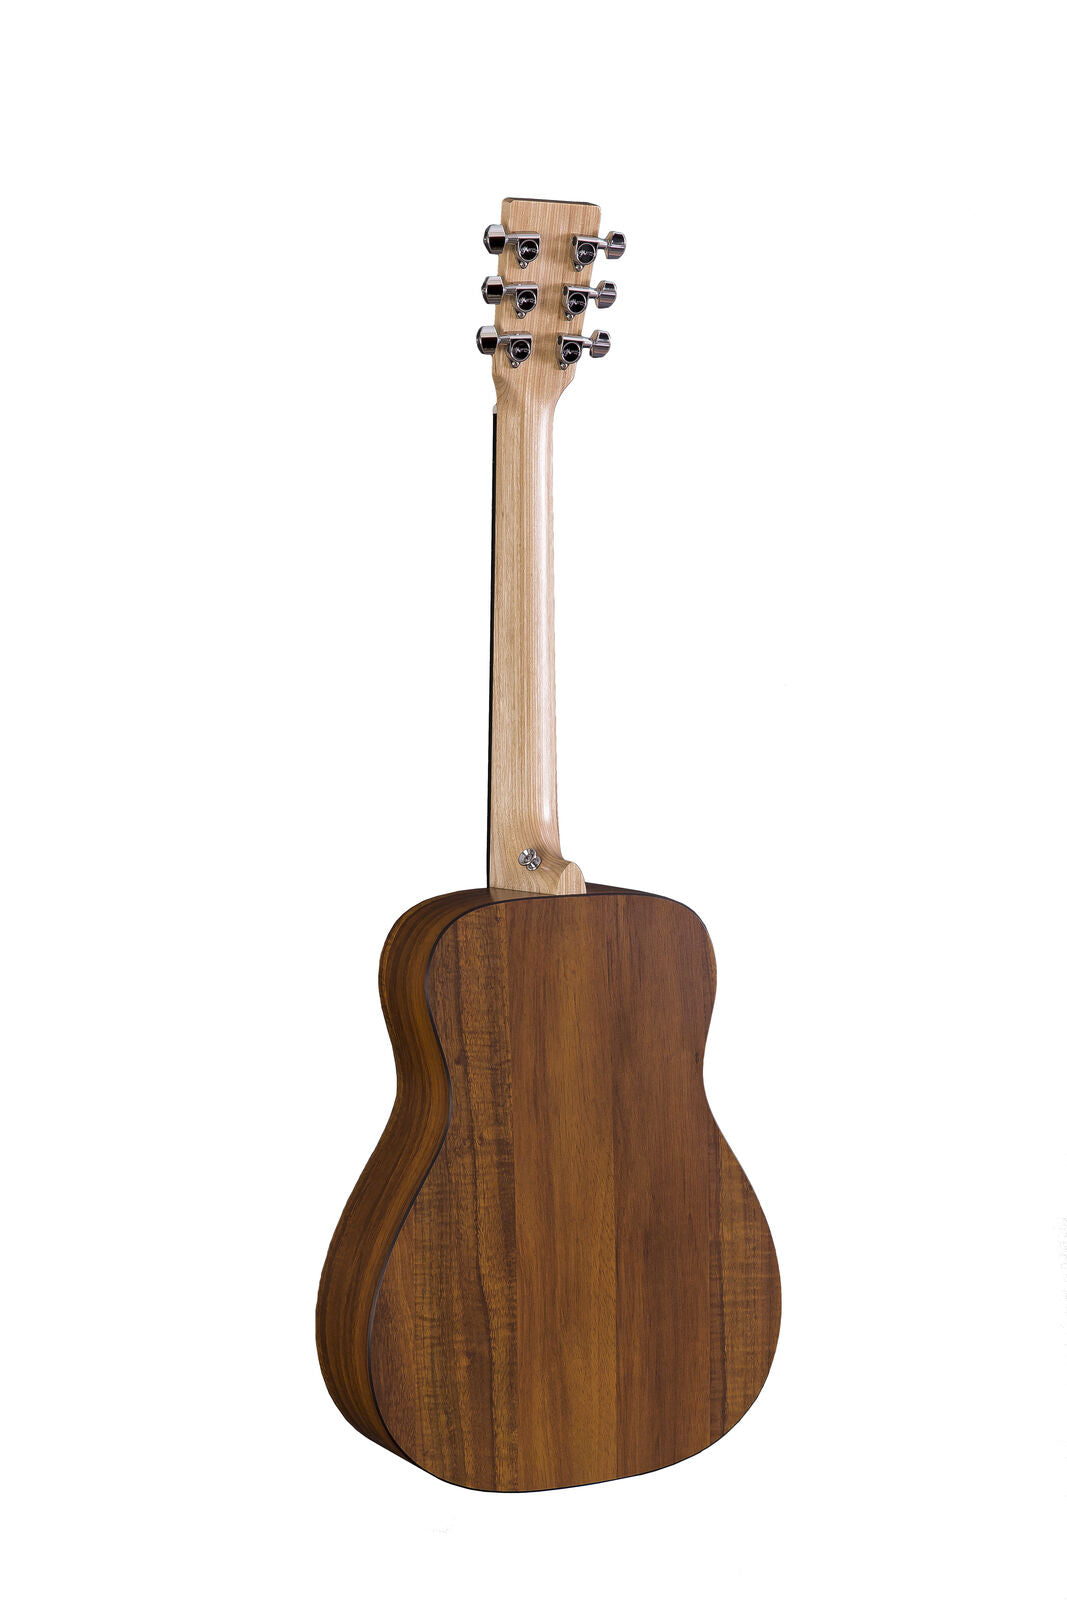 Martin X Series LX Koa Little Martin Acoustic Guitar Natural